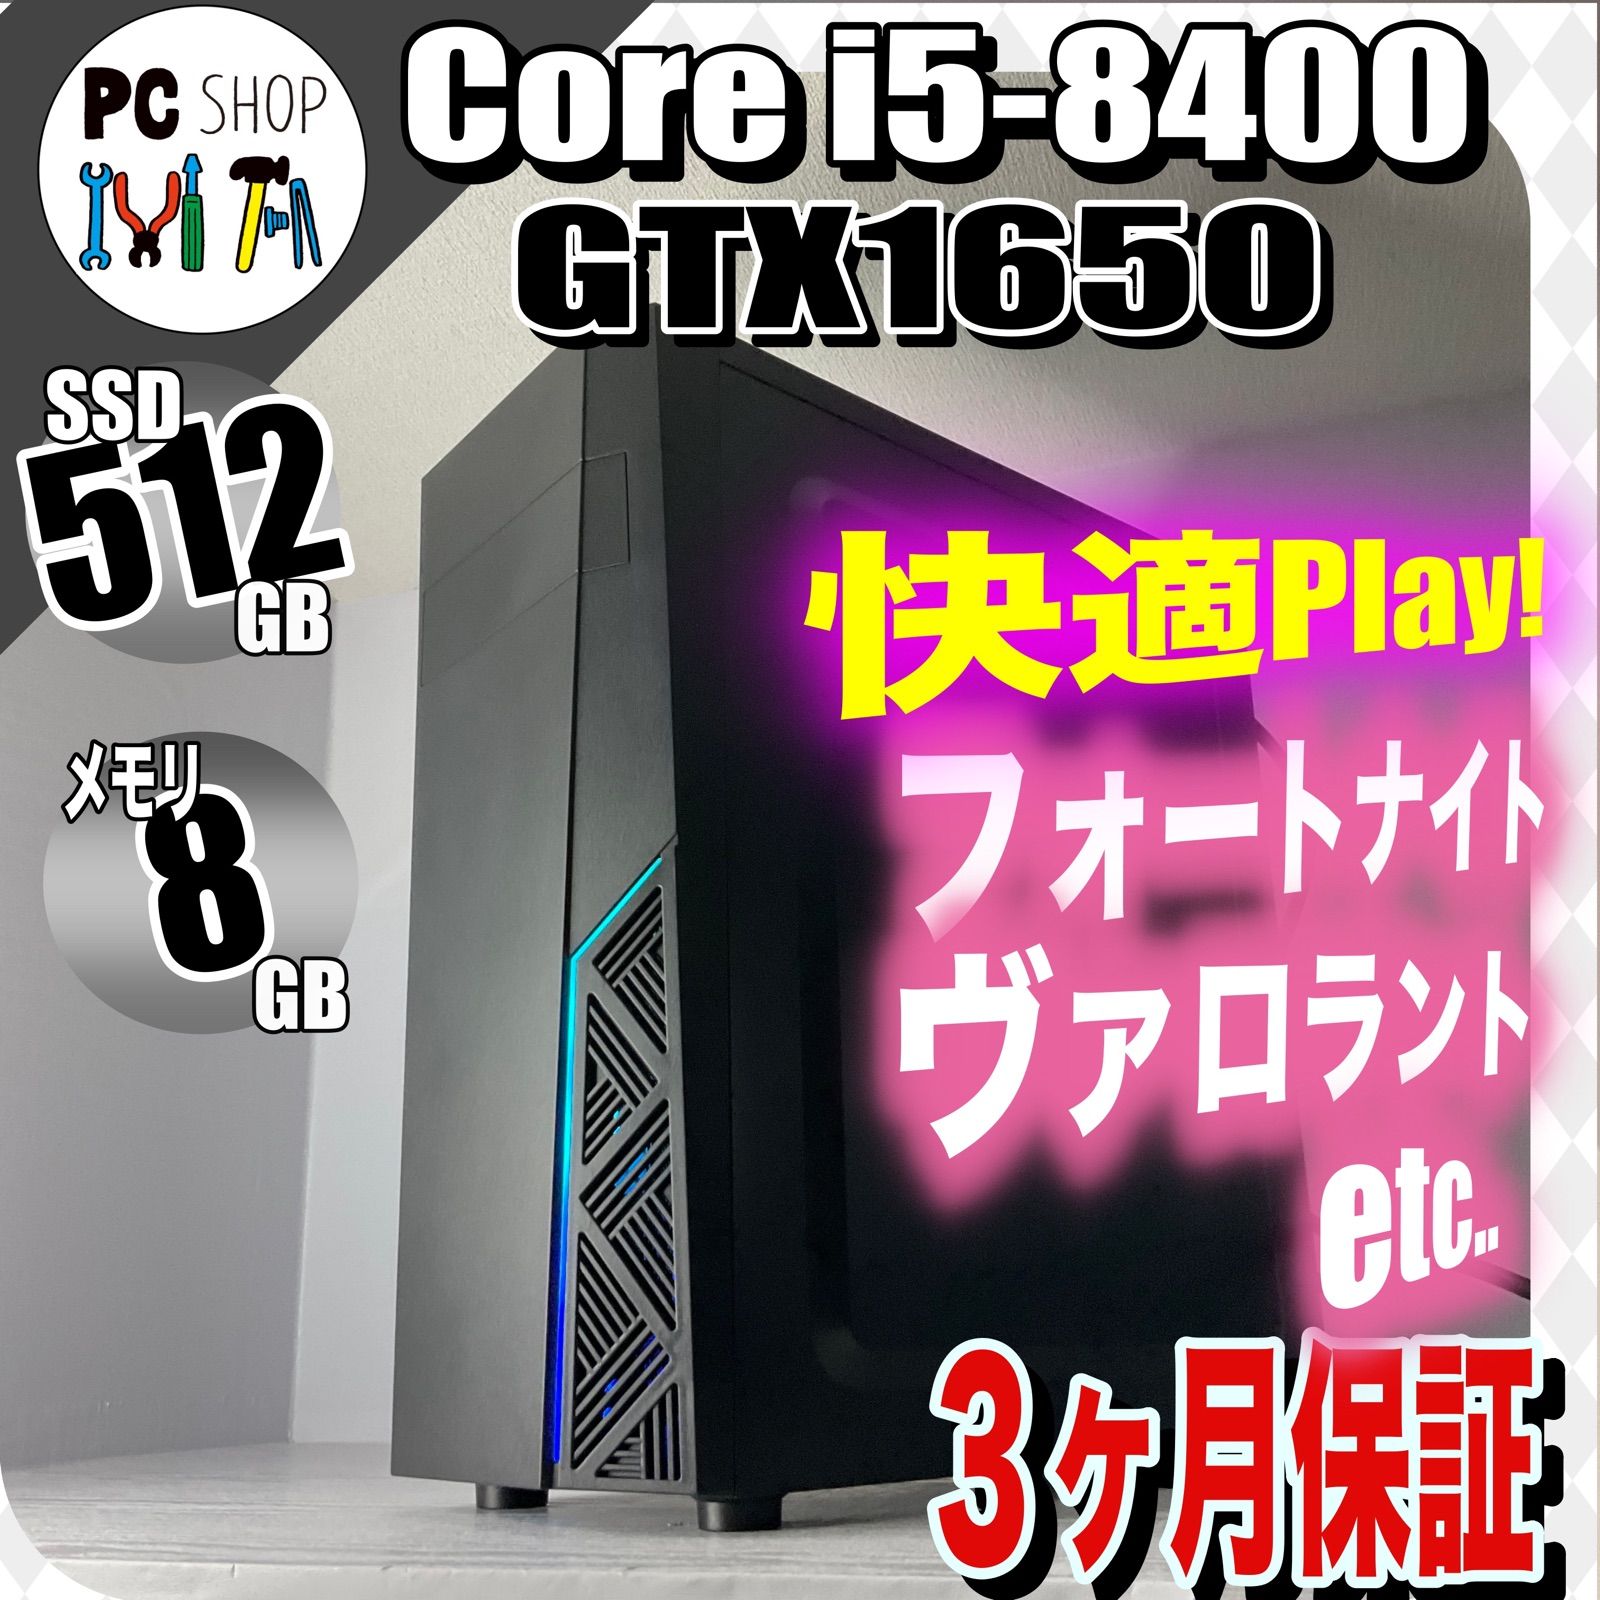 MA-010097］GTX1650 ゲーミングＰＣ Core i5-8400 SSD 512GB 初心者